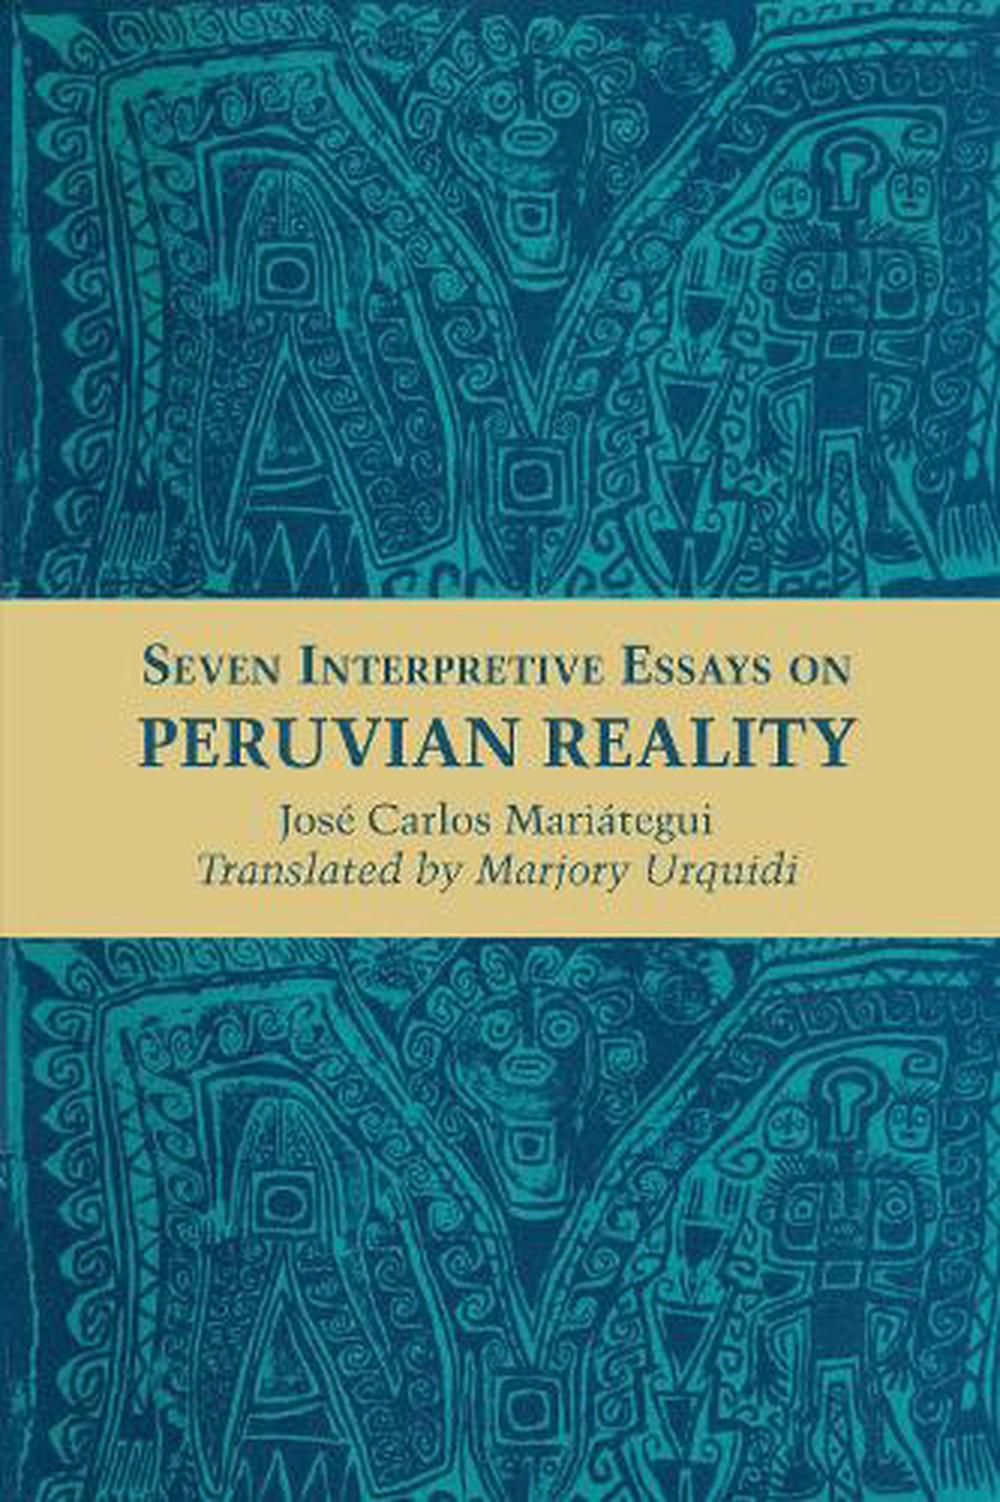 josé carlos mariátegui seven interpretive essays on peruvian reality